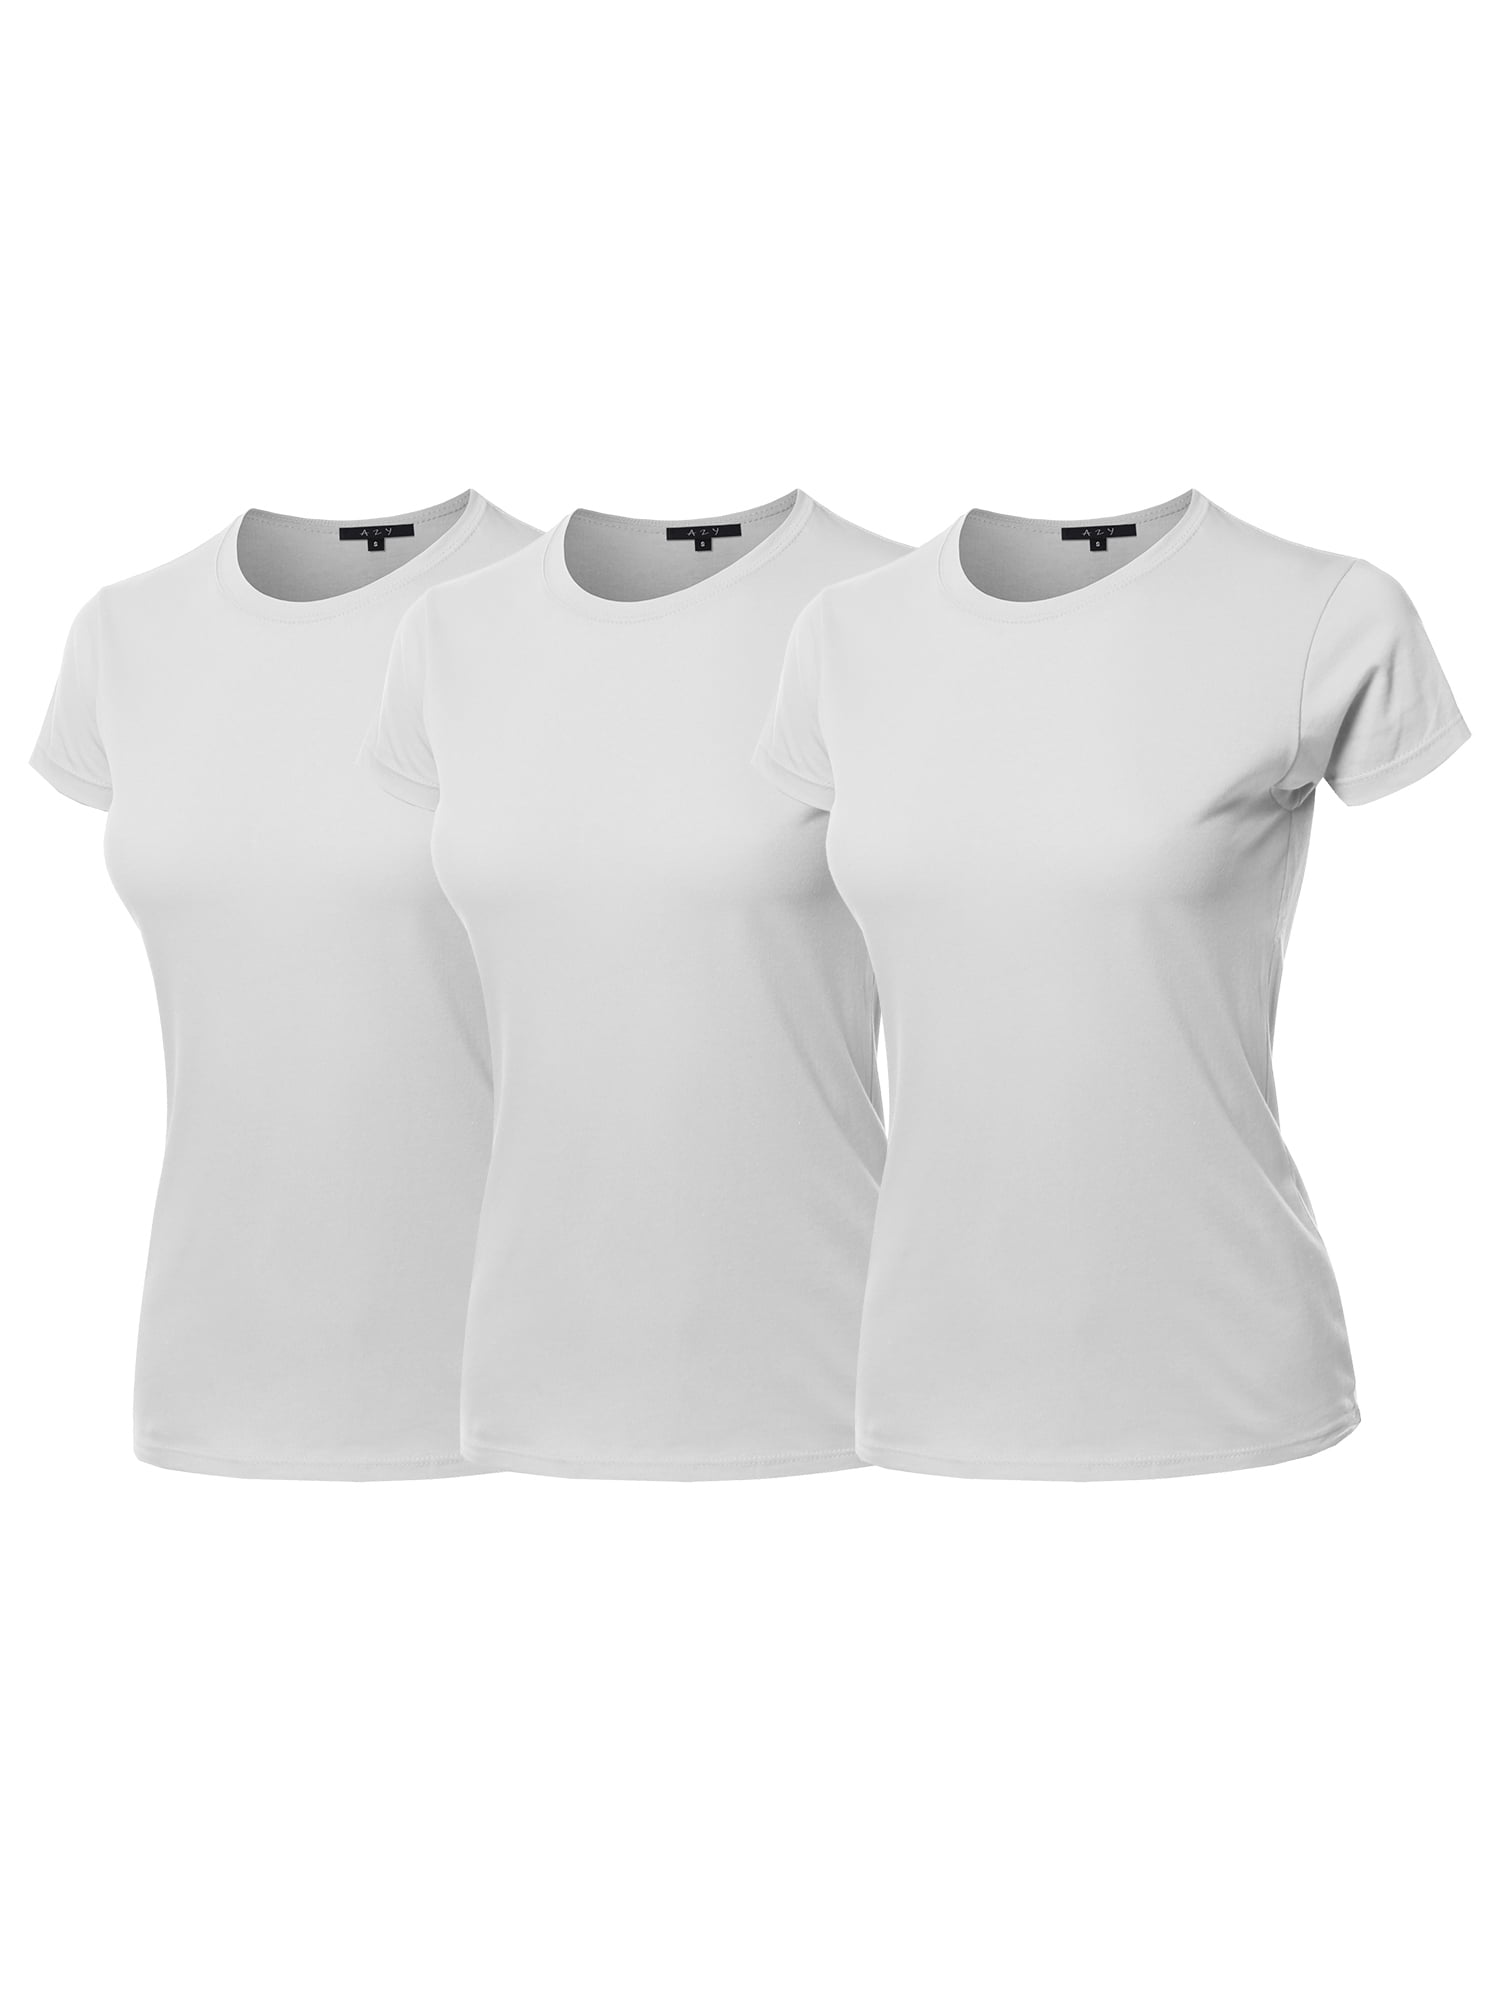 A2Y Women's Basic Solid Ring Spun 100% Cotton Short Sleeve Crew Neck T  Shirt Tee Tops 3 Pack - White 2XL - Walmart.com